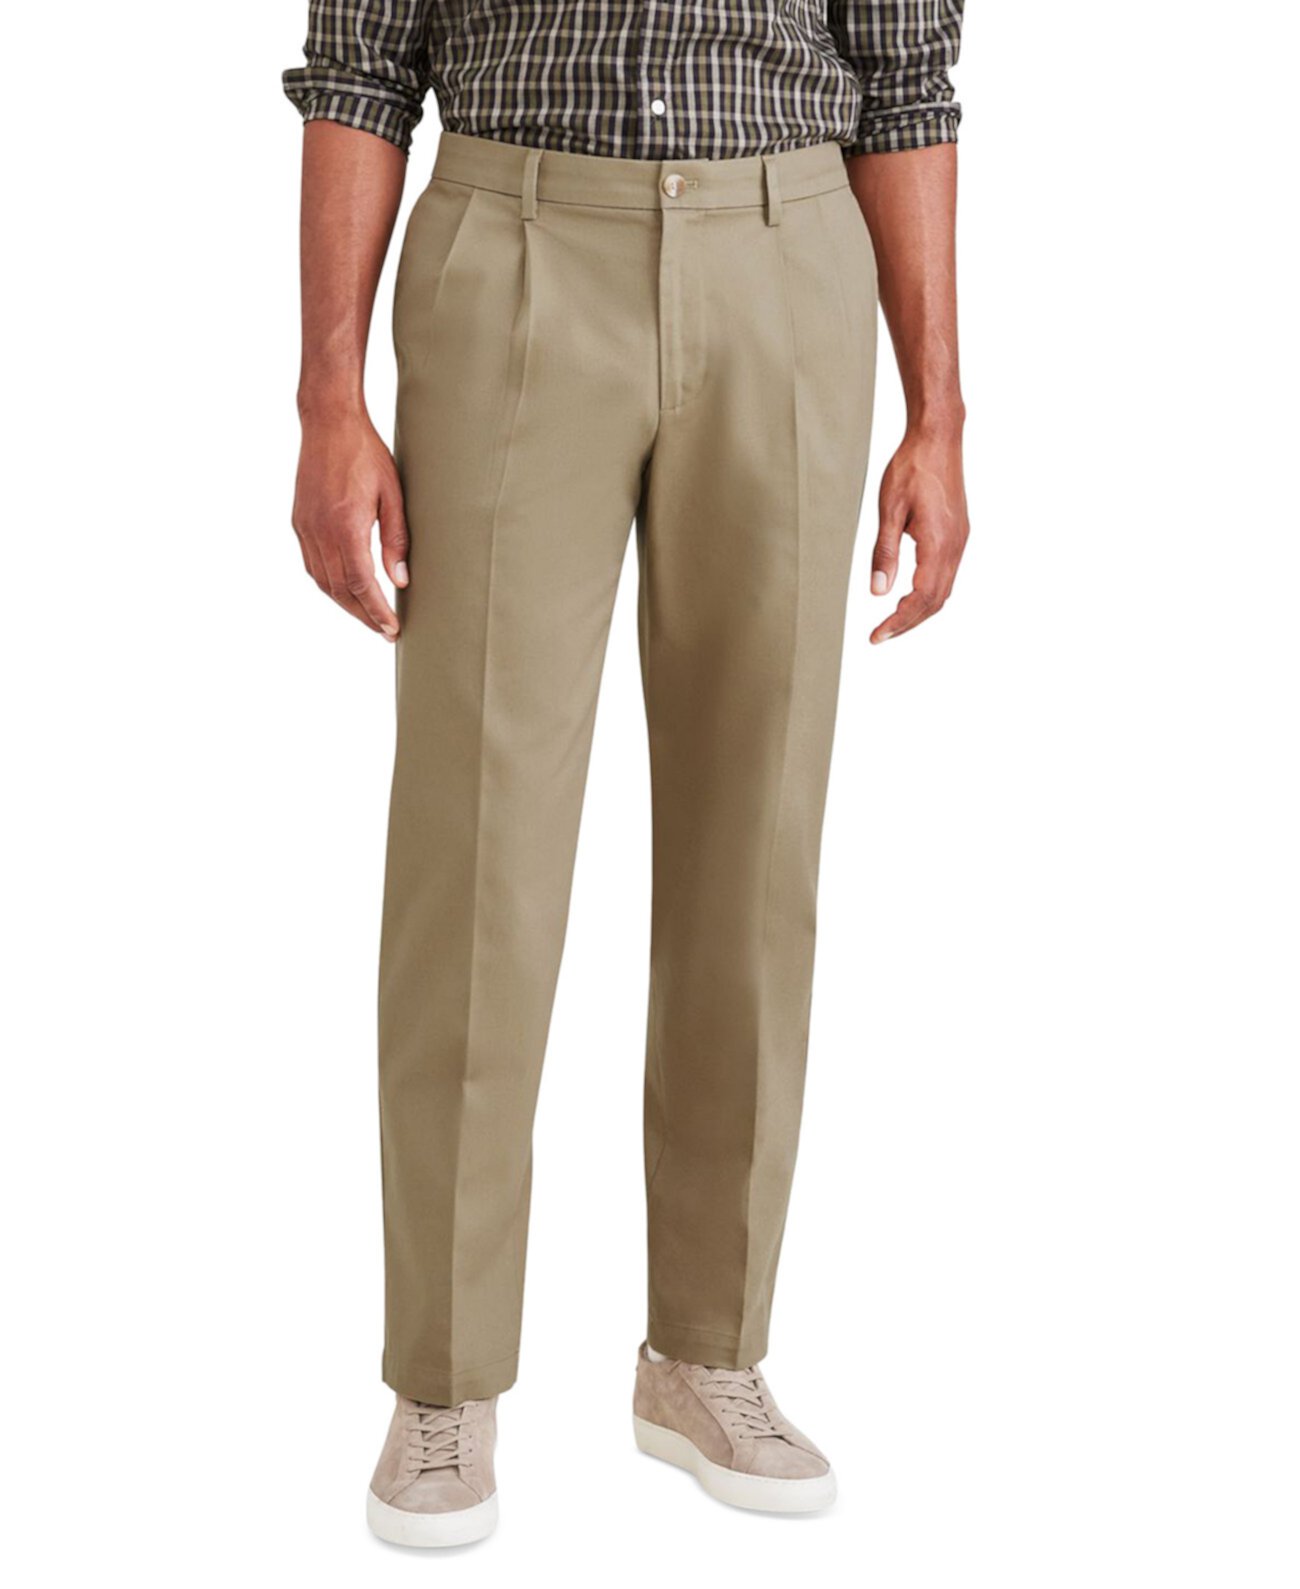 Мужские брюки классического кроя Big & Tall Signature со складками без железа и защитой от пятен Dockers